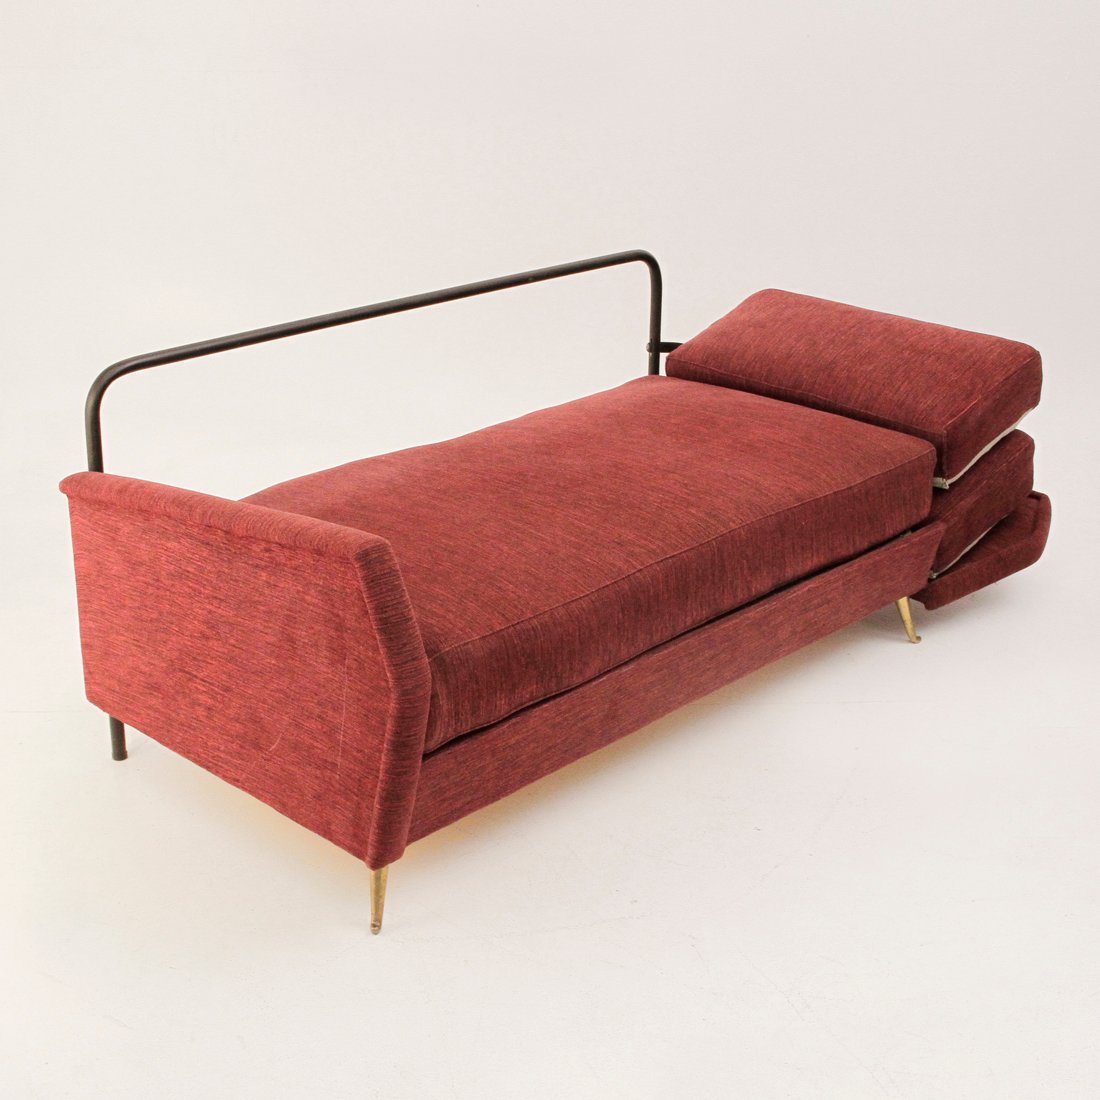 MidCentury Italian Sofa Bed, 1950s for sale at Pamono